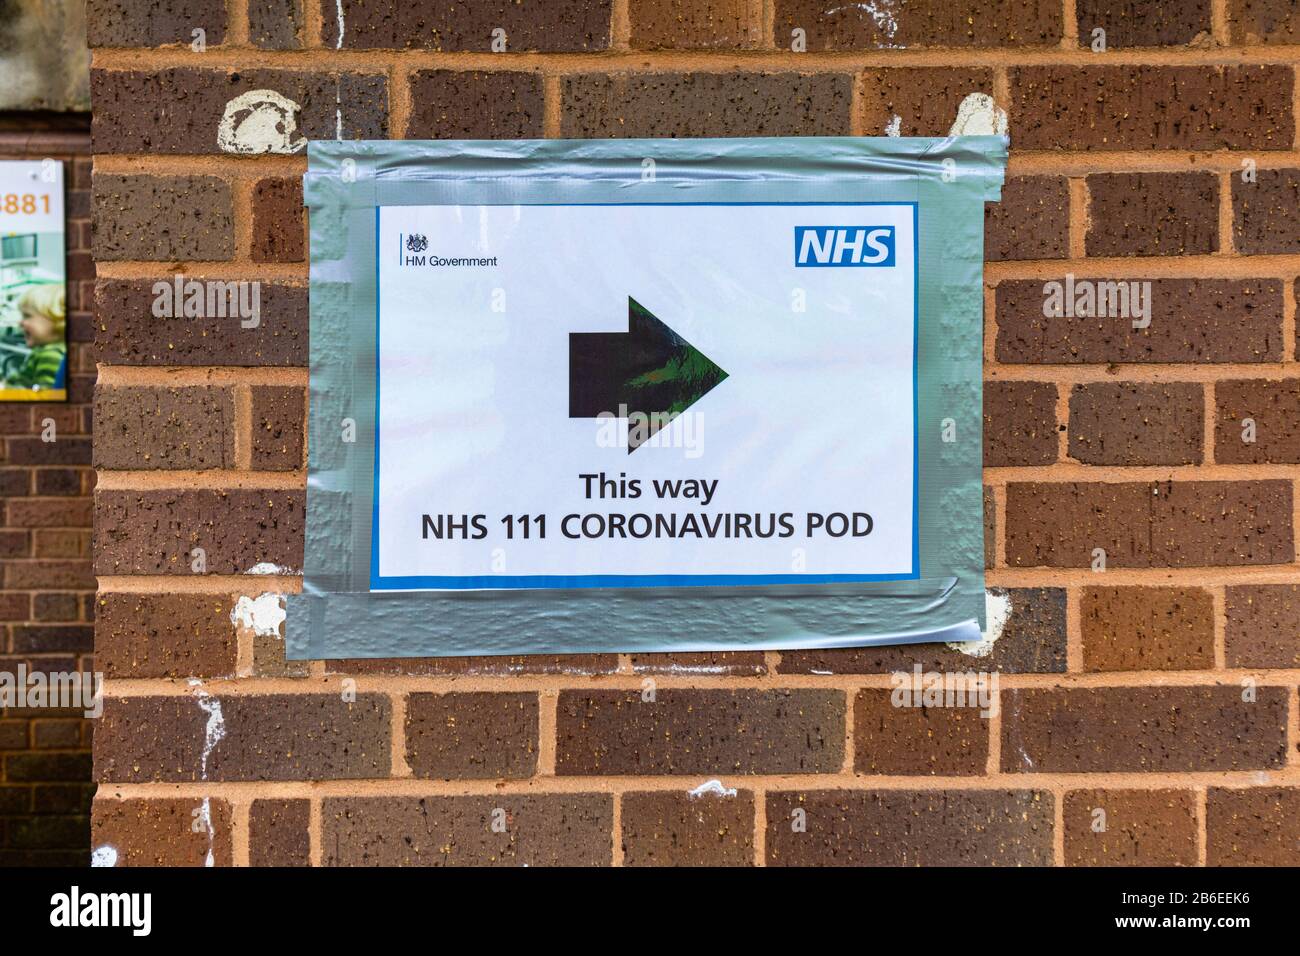 Firme que señala a un NHS 111 Coronavirus Pod, Southampton General Hospital, un hospital de enseñanza del Hospital Universitario Southampton NHS Foundation Trust Foto de stock